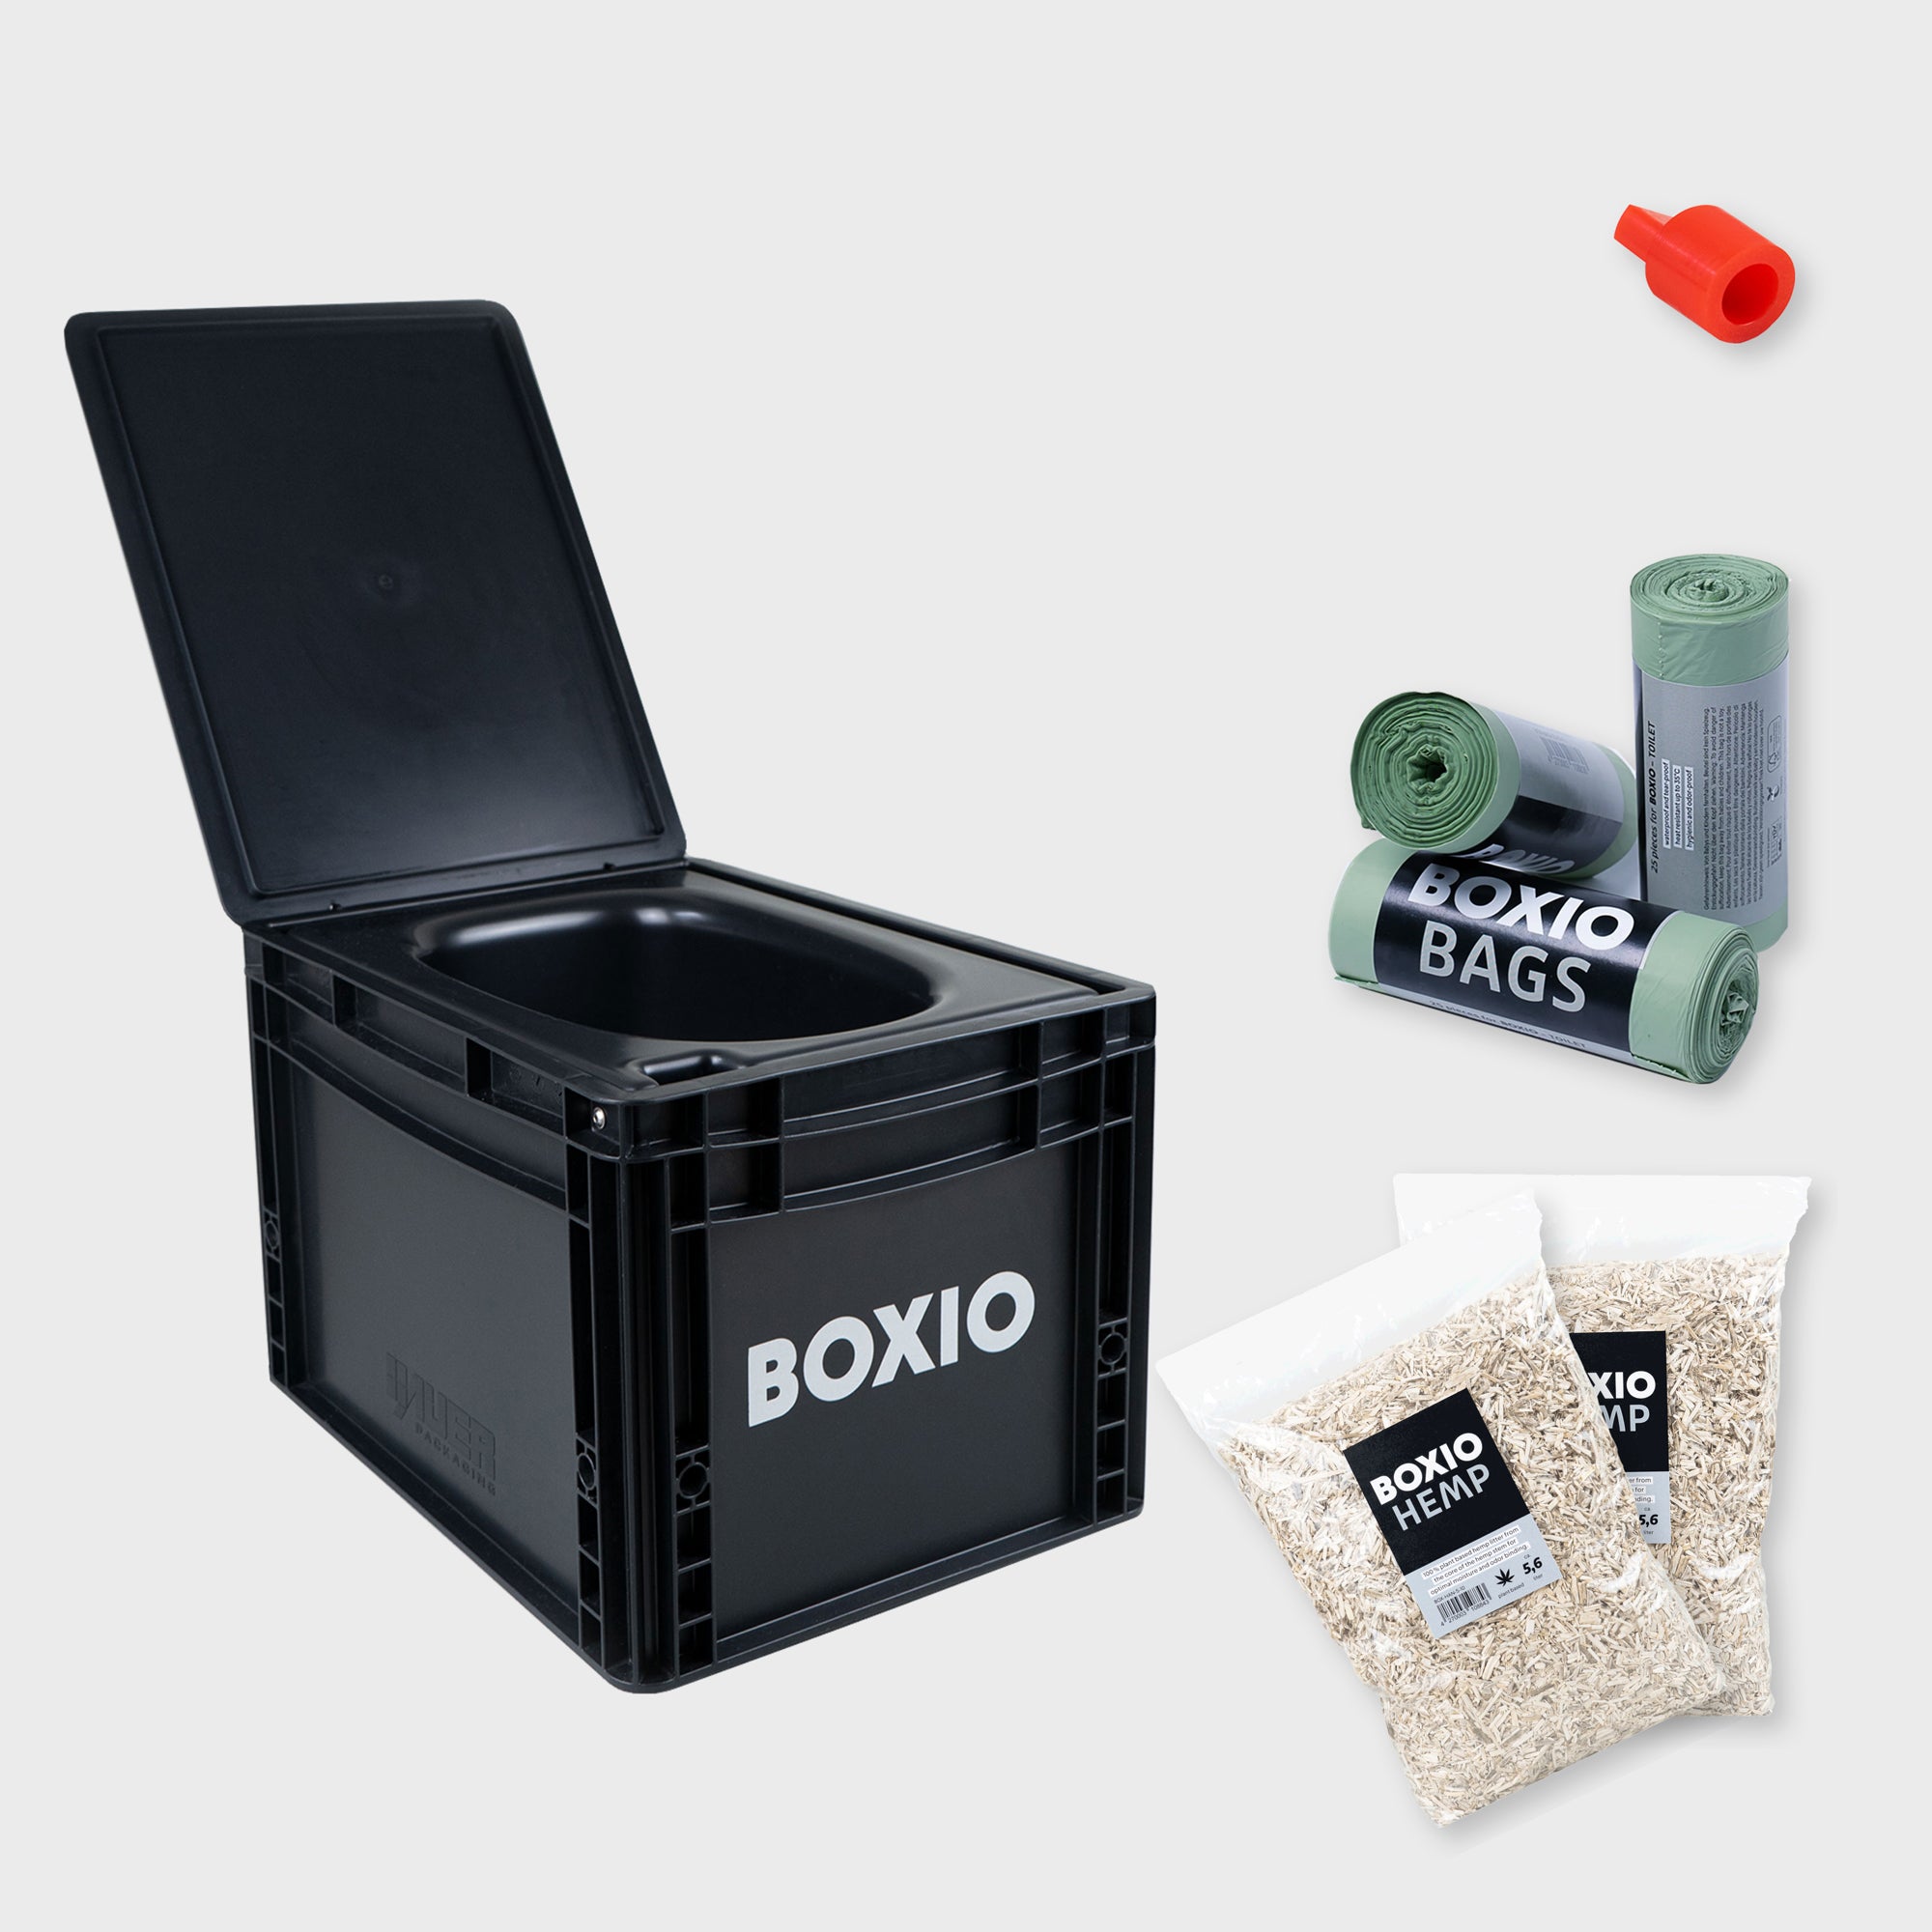 BOXIO - TOILET Plus - Conjunto inicial para sanita separadora